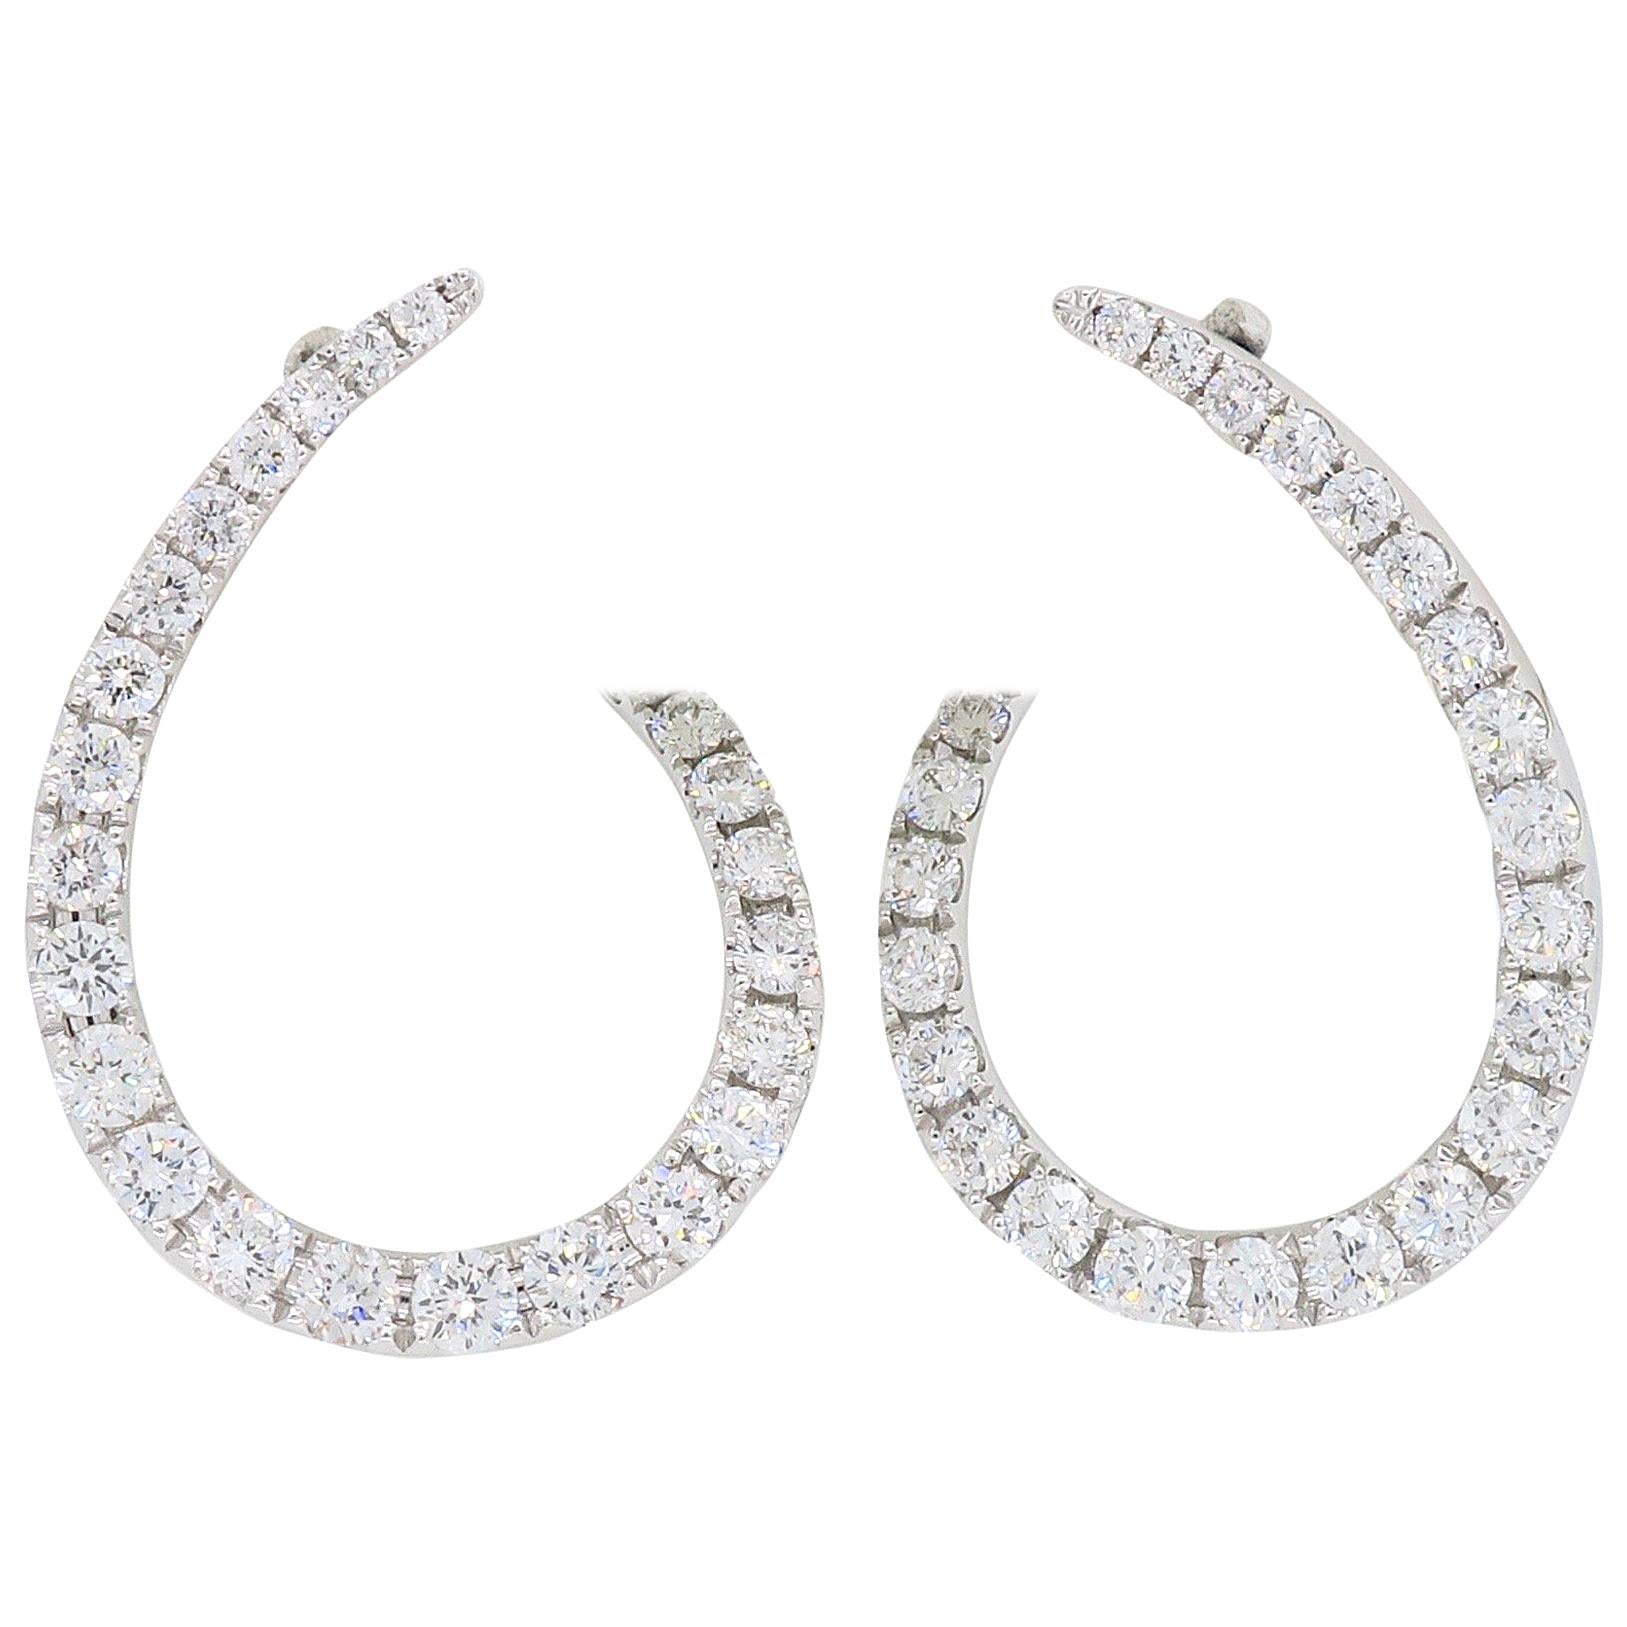 Diamond Fashion Earrings in 18 Karat White Gold